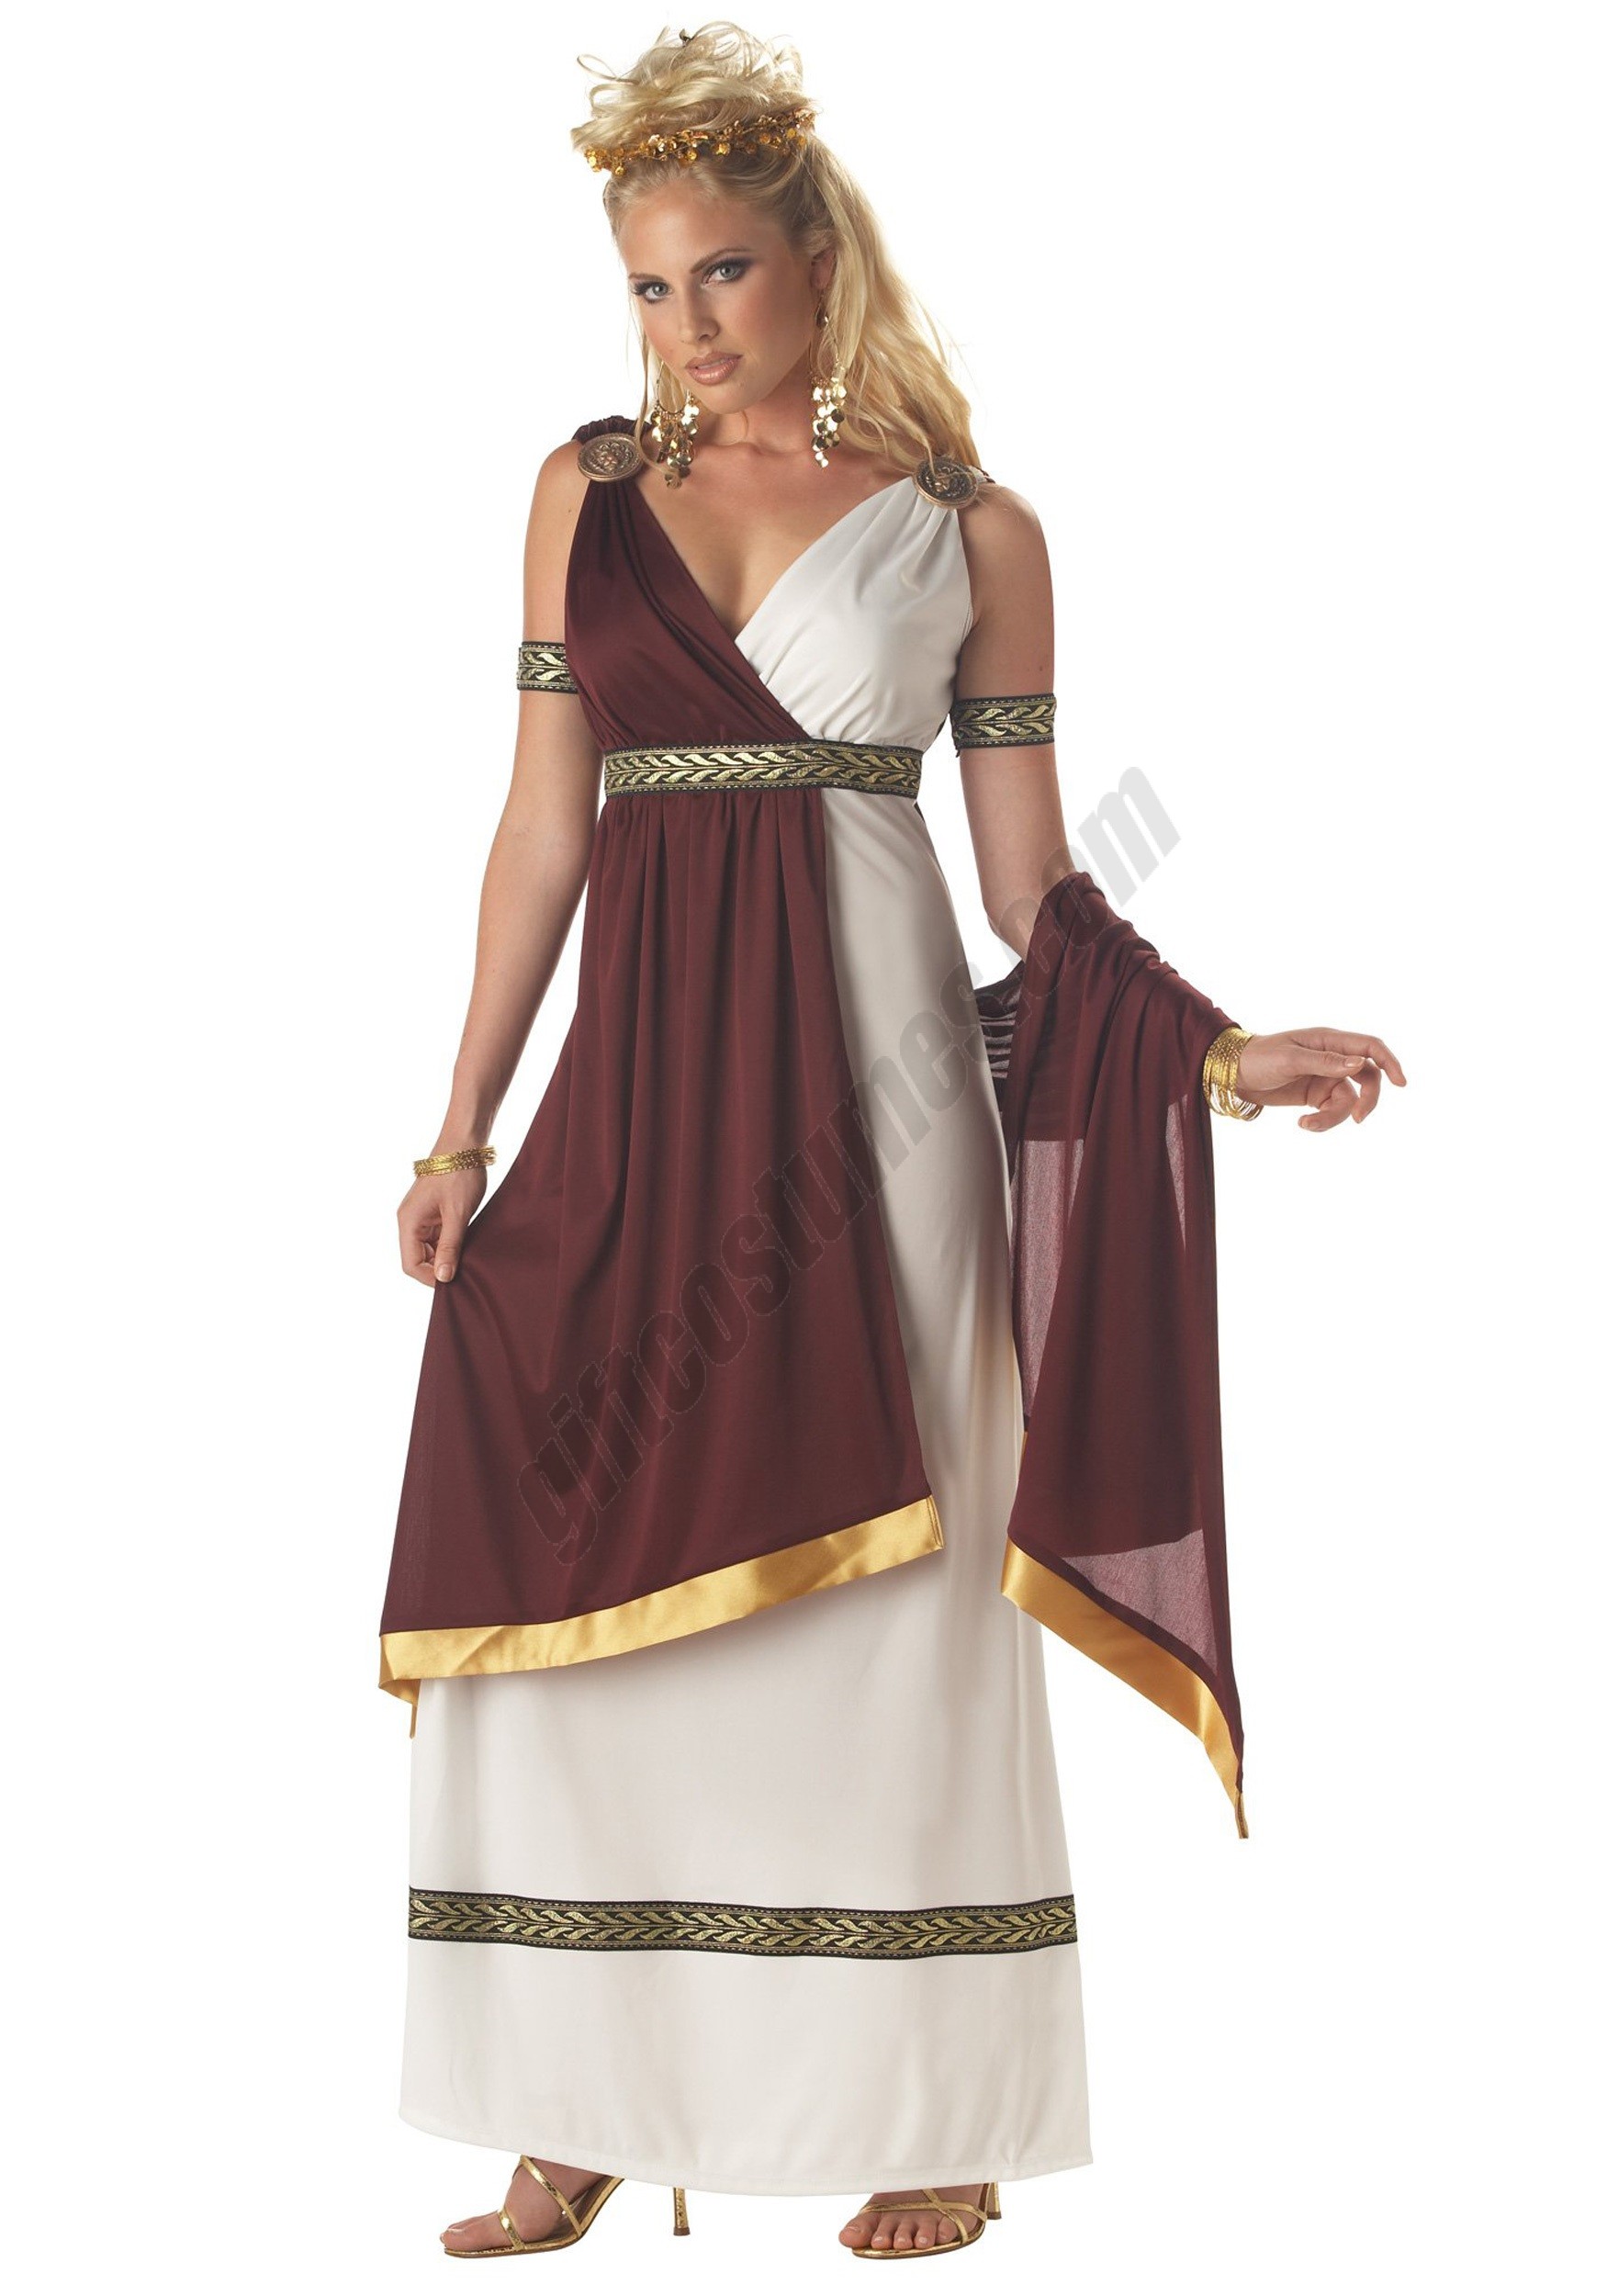 Roman Empress Costume Promotions - Roman Empress Costume Promotions